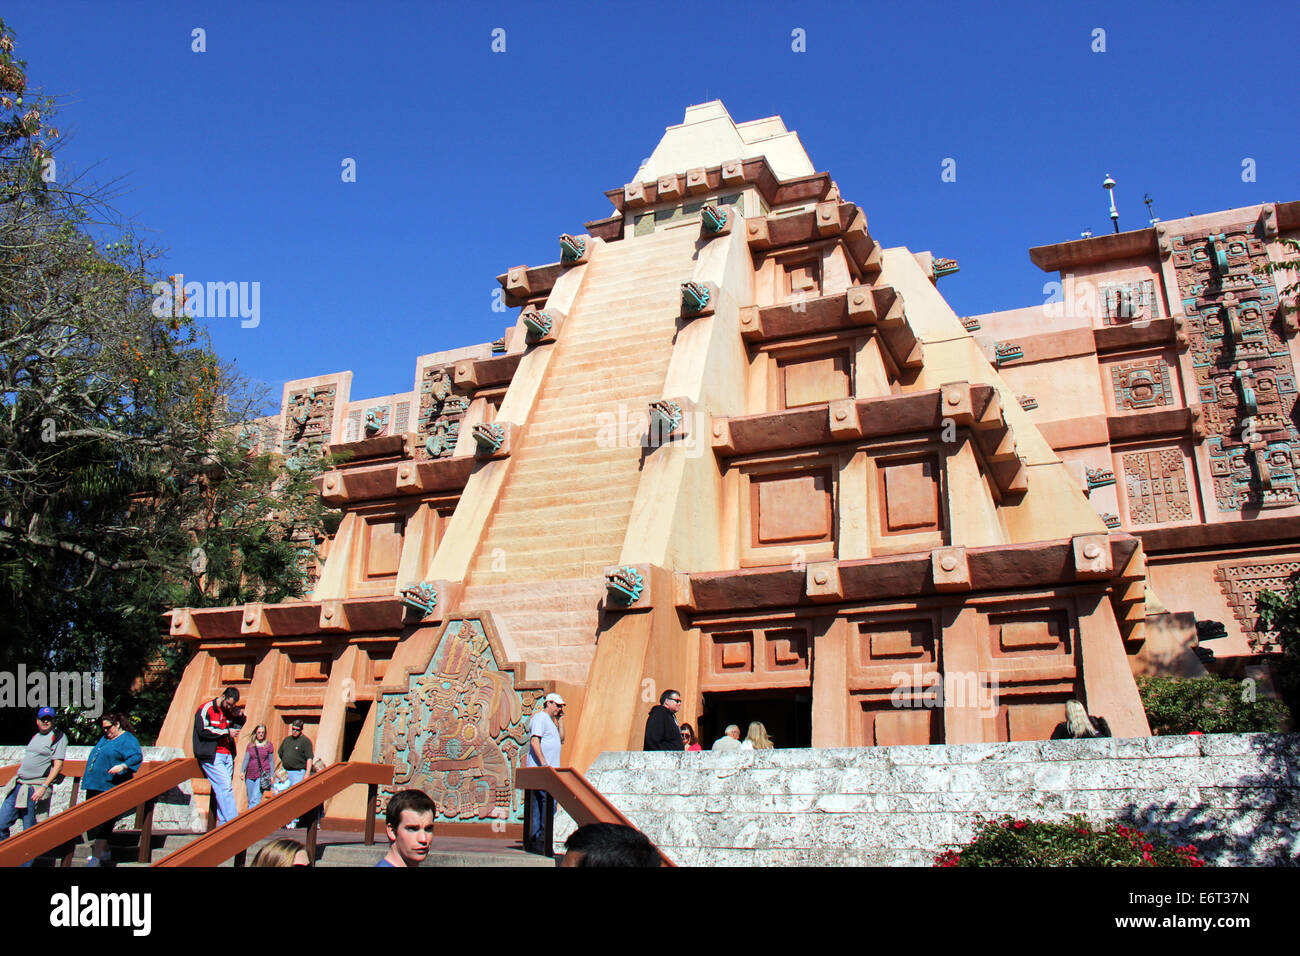 Aztec pyramid at the Mexican pavilion of Epcot Center, Walt Disney World Showcase. Stock Photo